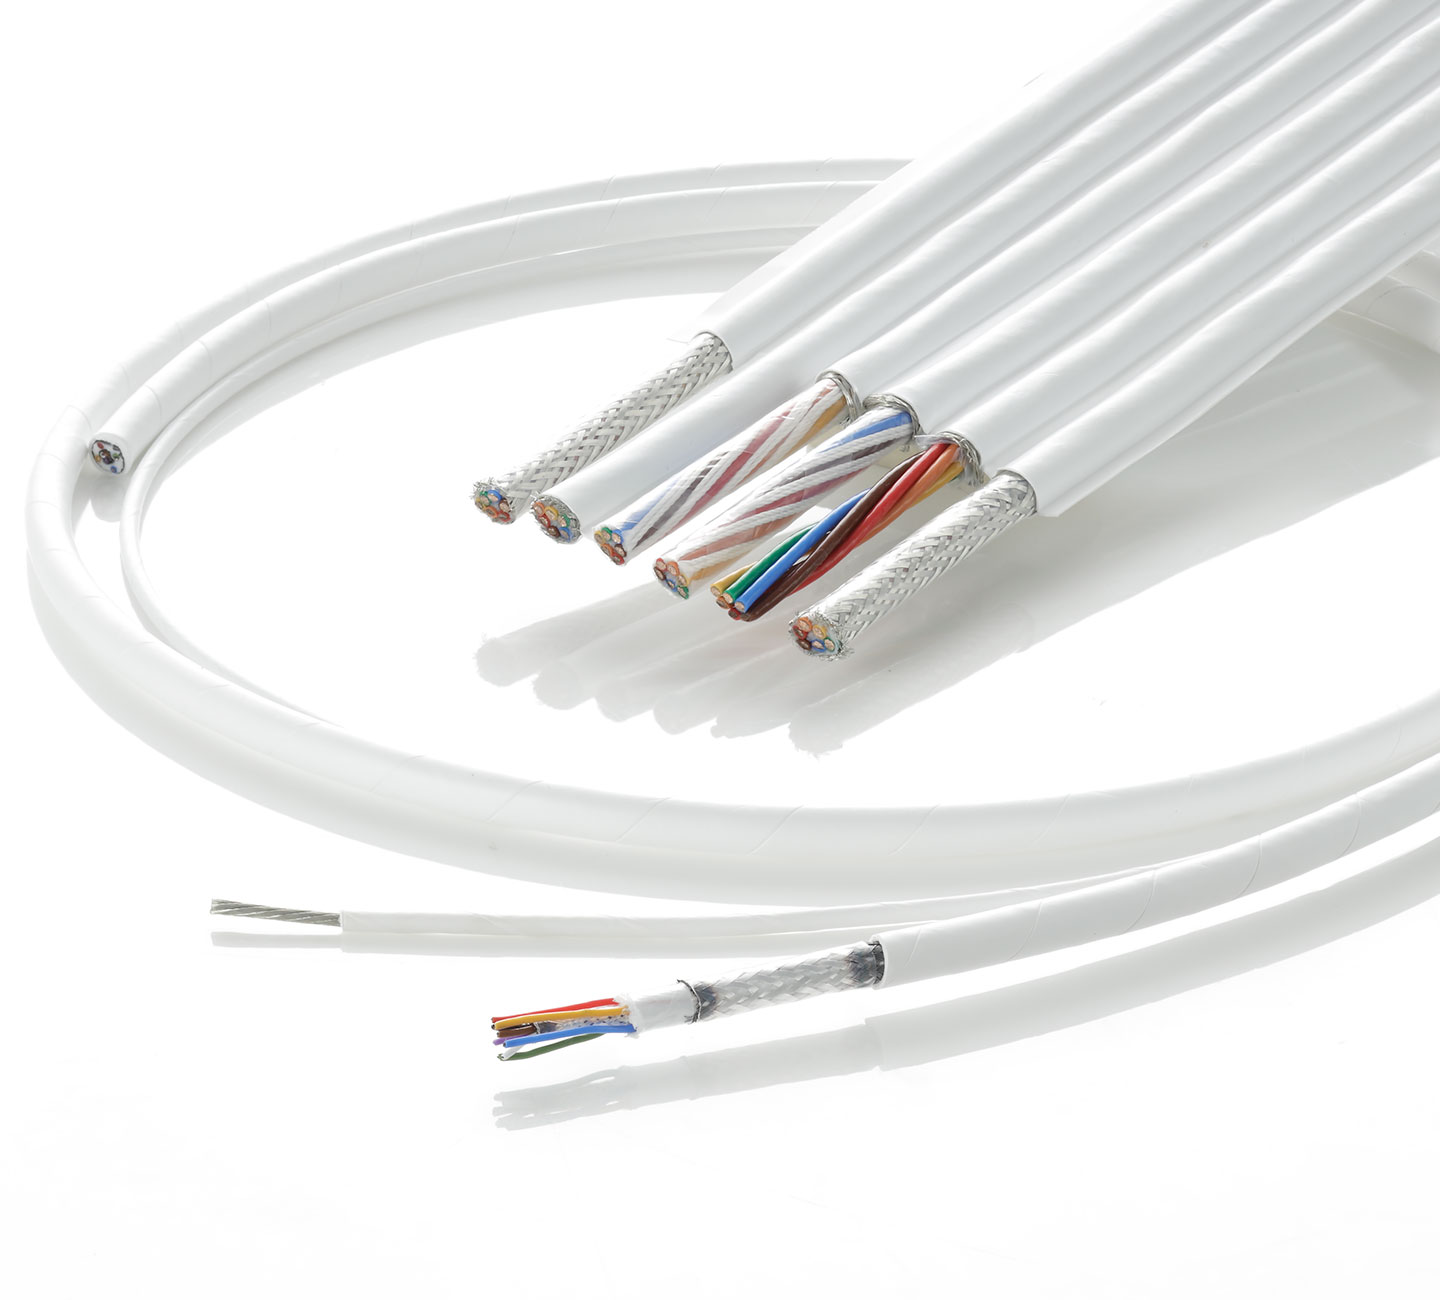  HAIXHX Canaleta de cable medio redondo, protector de cubierta  de cable flexible de PVC con respaldo autoadhesivo para gestión de cables  eléctricos (color blanco, tamaño: No.3) : Electrónica